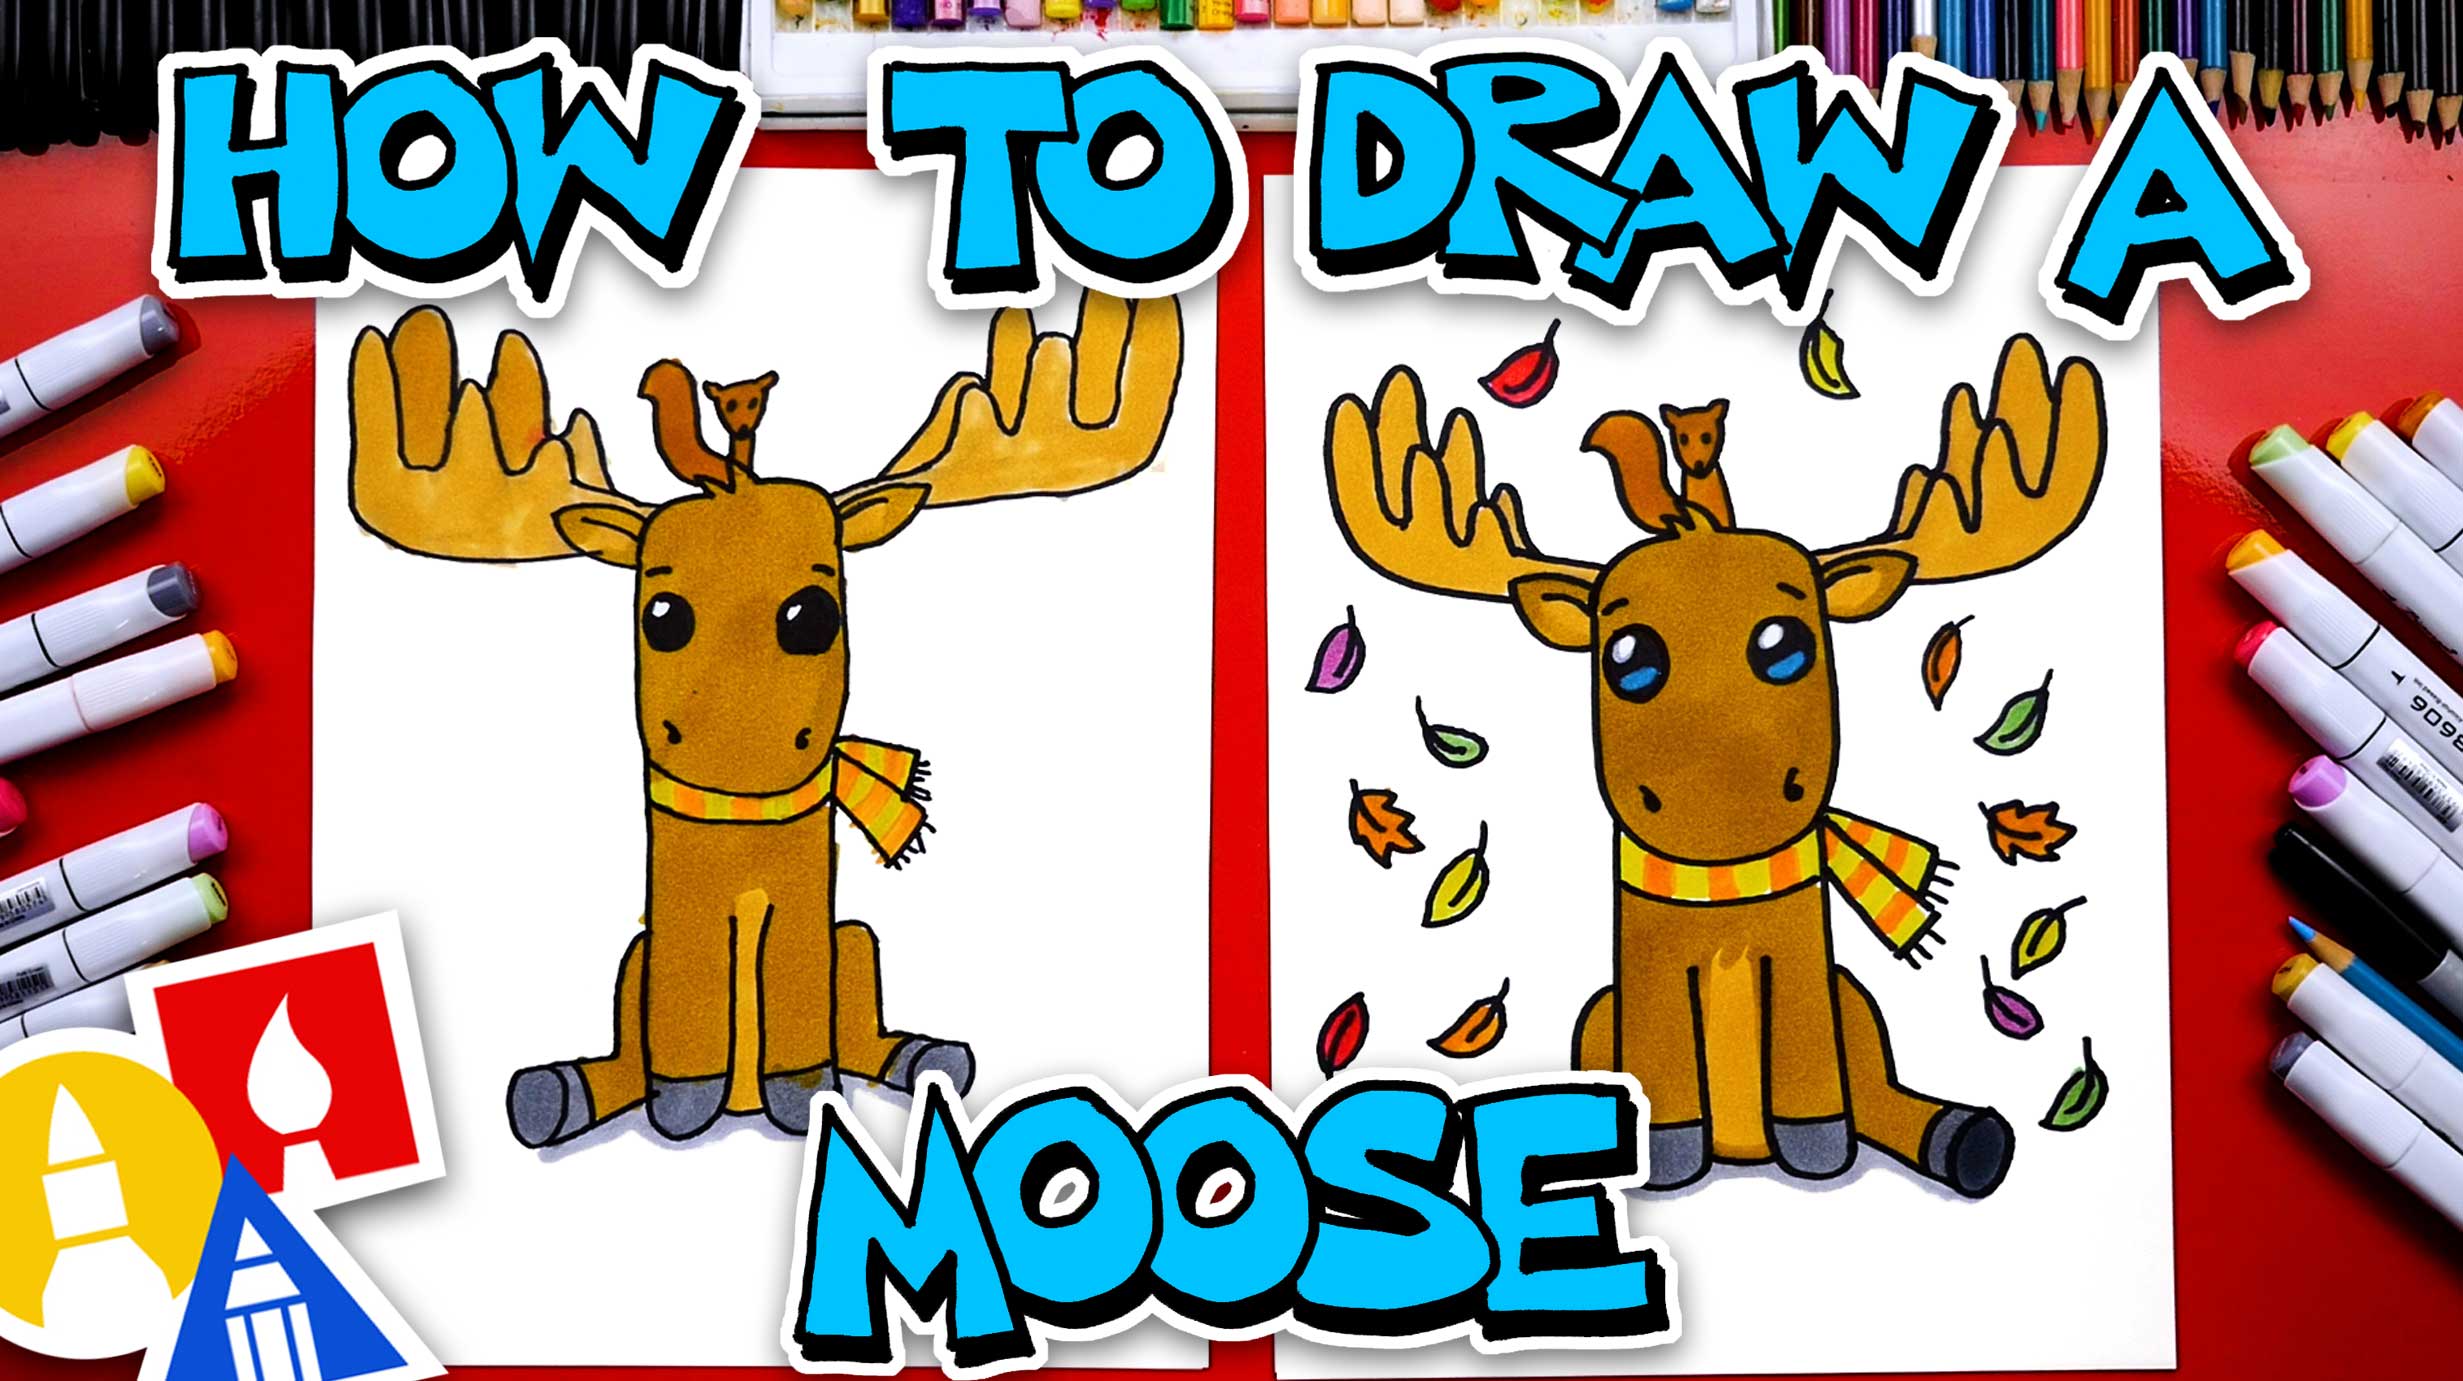 cute moose drawing